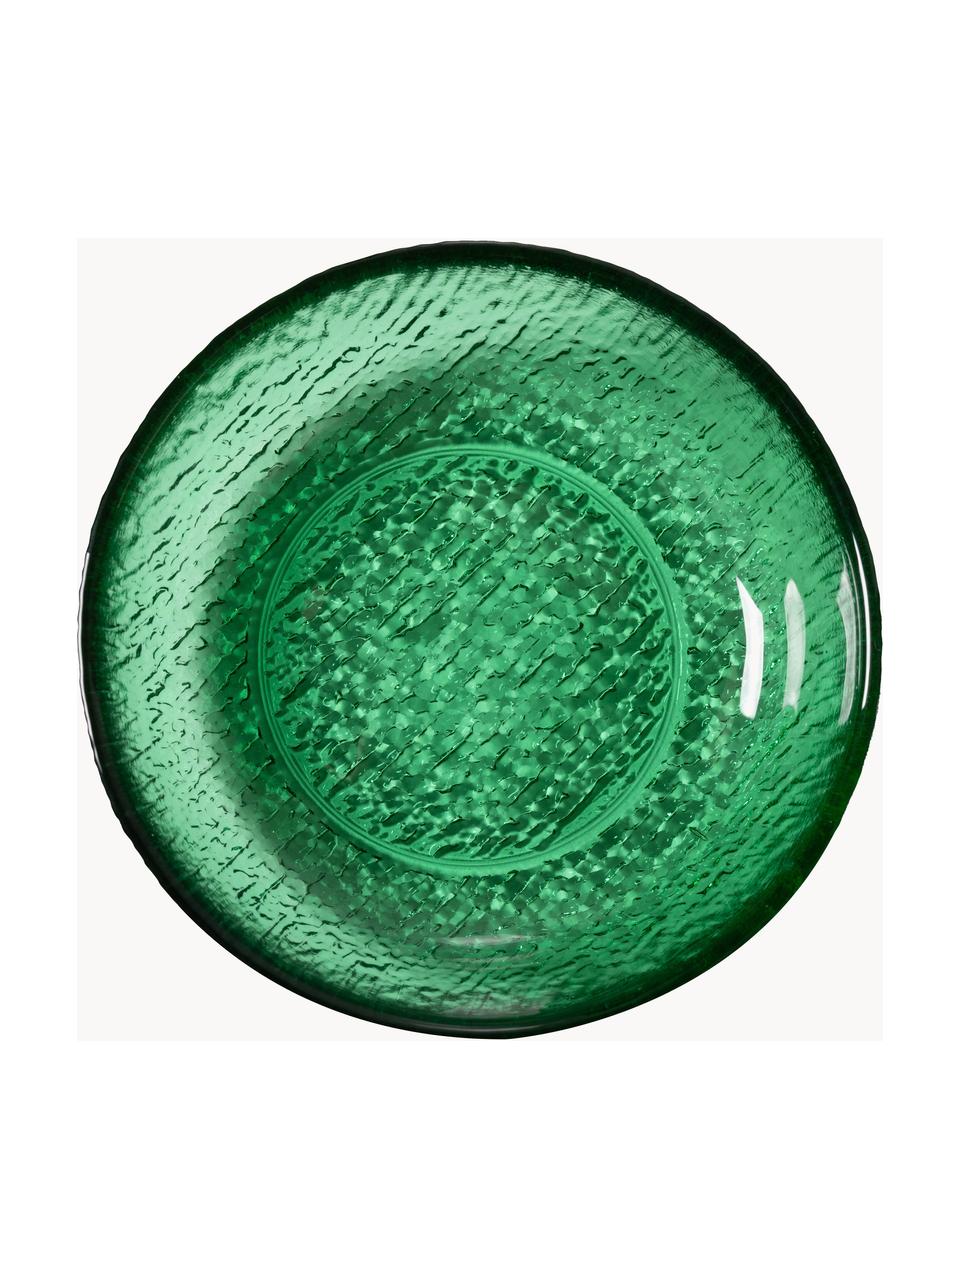 Ciotola immersione in vetro The Emeralds 2 pz, Vetro, Verde trasparente, Ø 13 cm